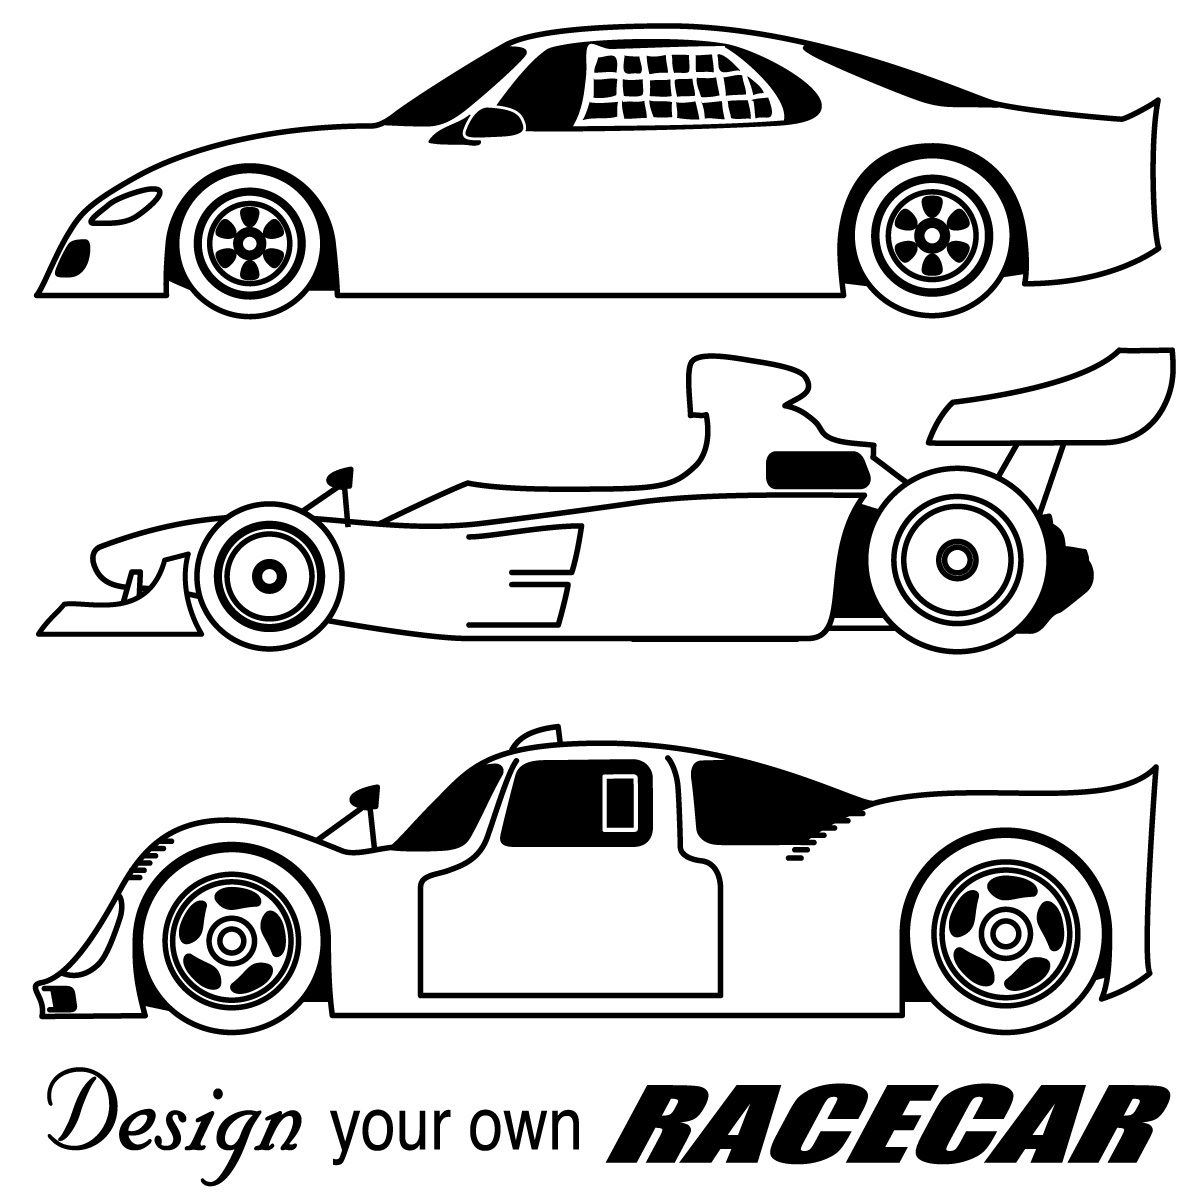 Race car line art clipart - ClipartFox